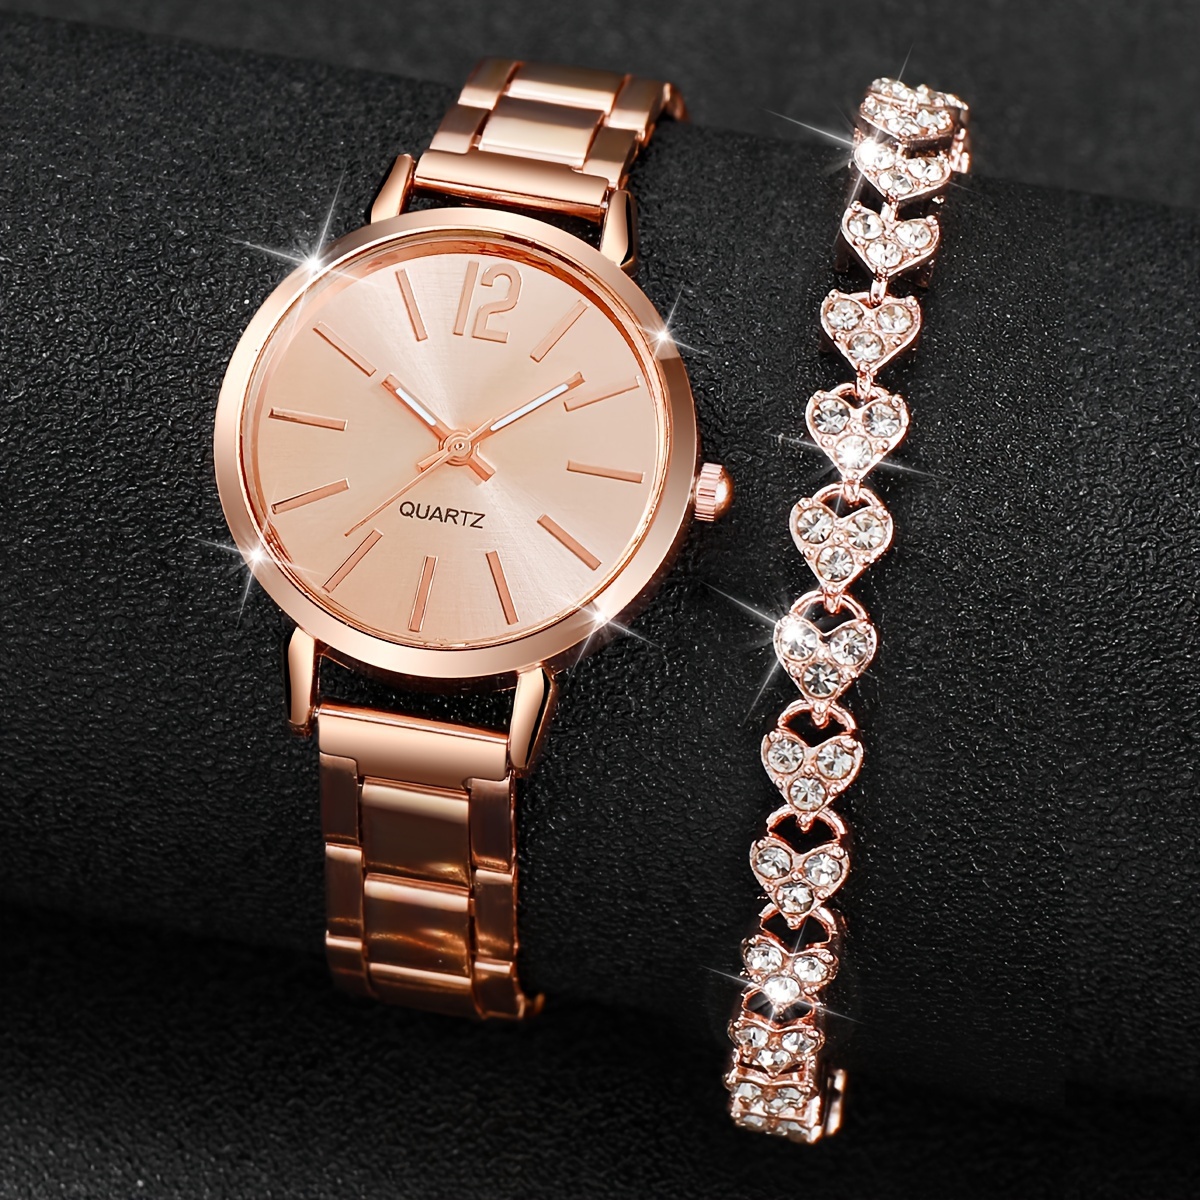 

2pcs/set Women's Minimalist Rose Golden Quartz Watch Analog Steel Band Wrist Watch & Rhinestone Bracelet, Gift For Mom Her